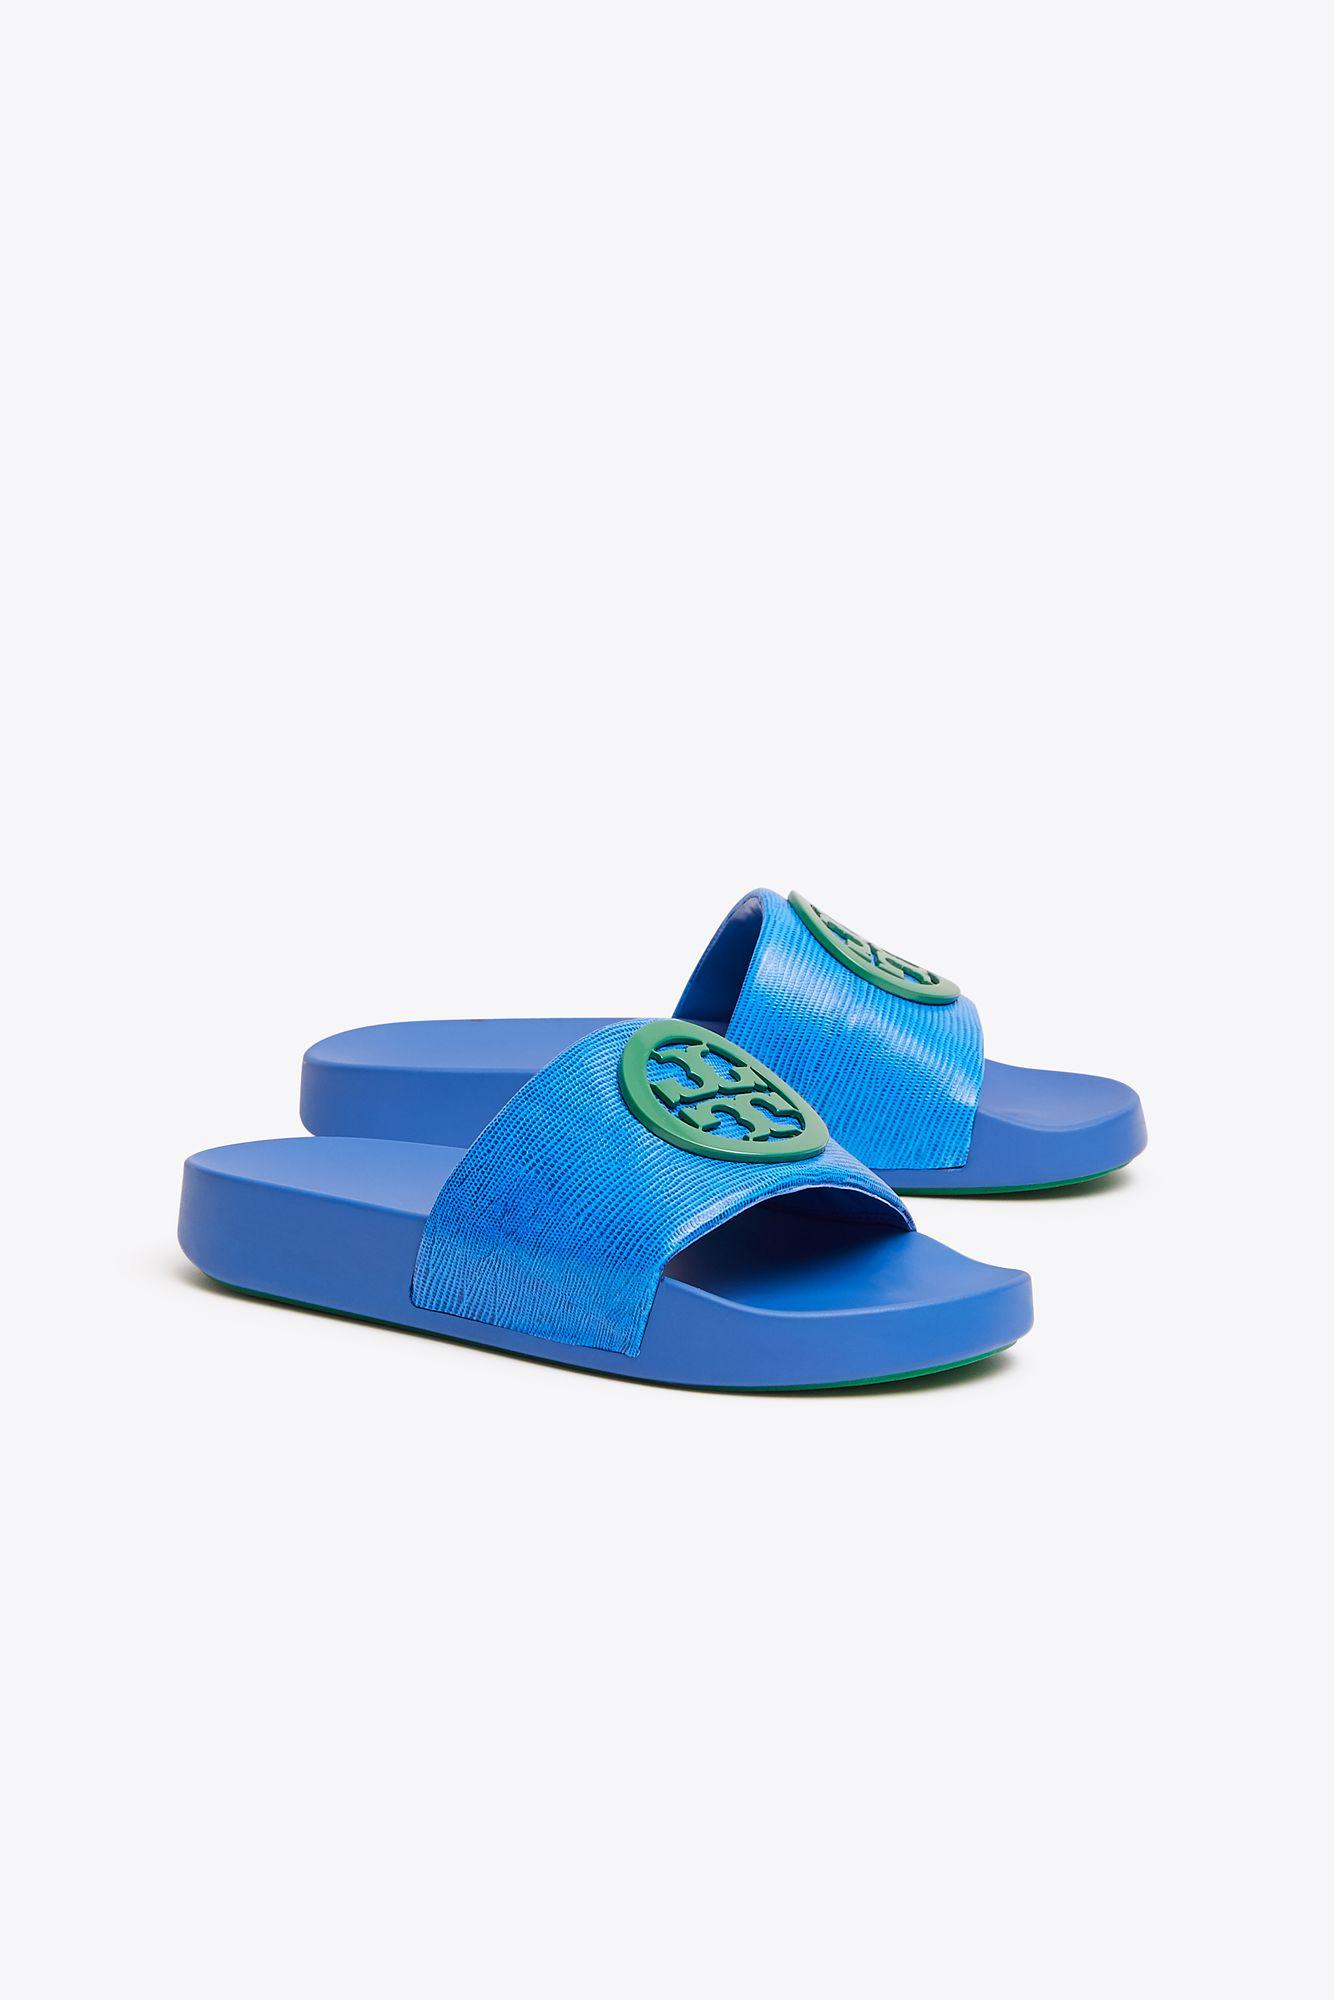 Lyst - Tory Burch Lina Slide | 423 | Flat Sandals in Blue